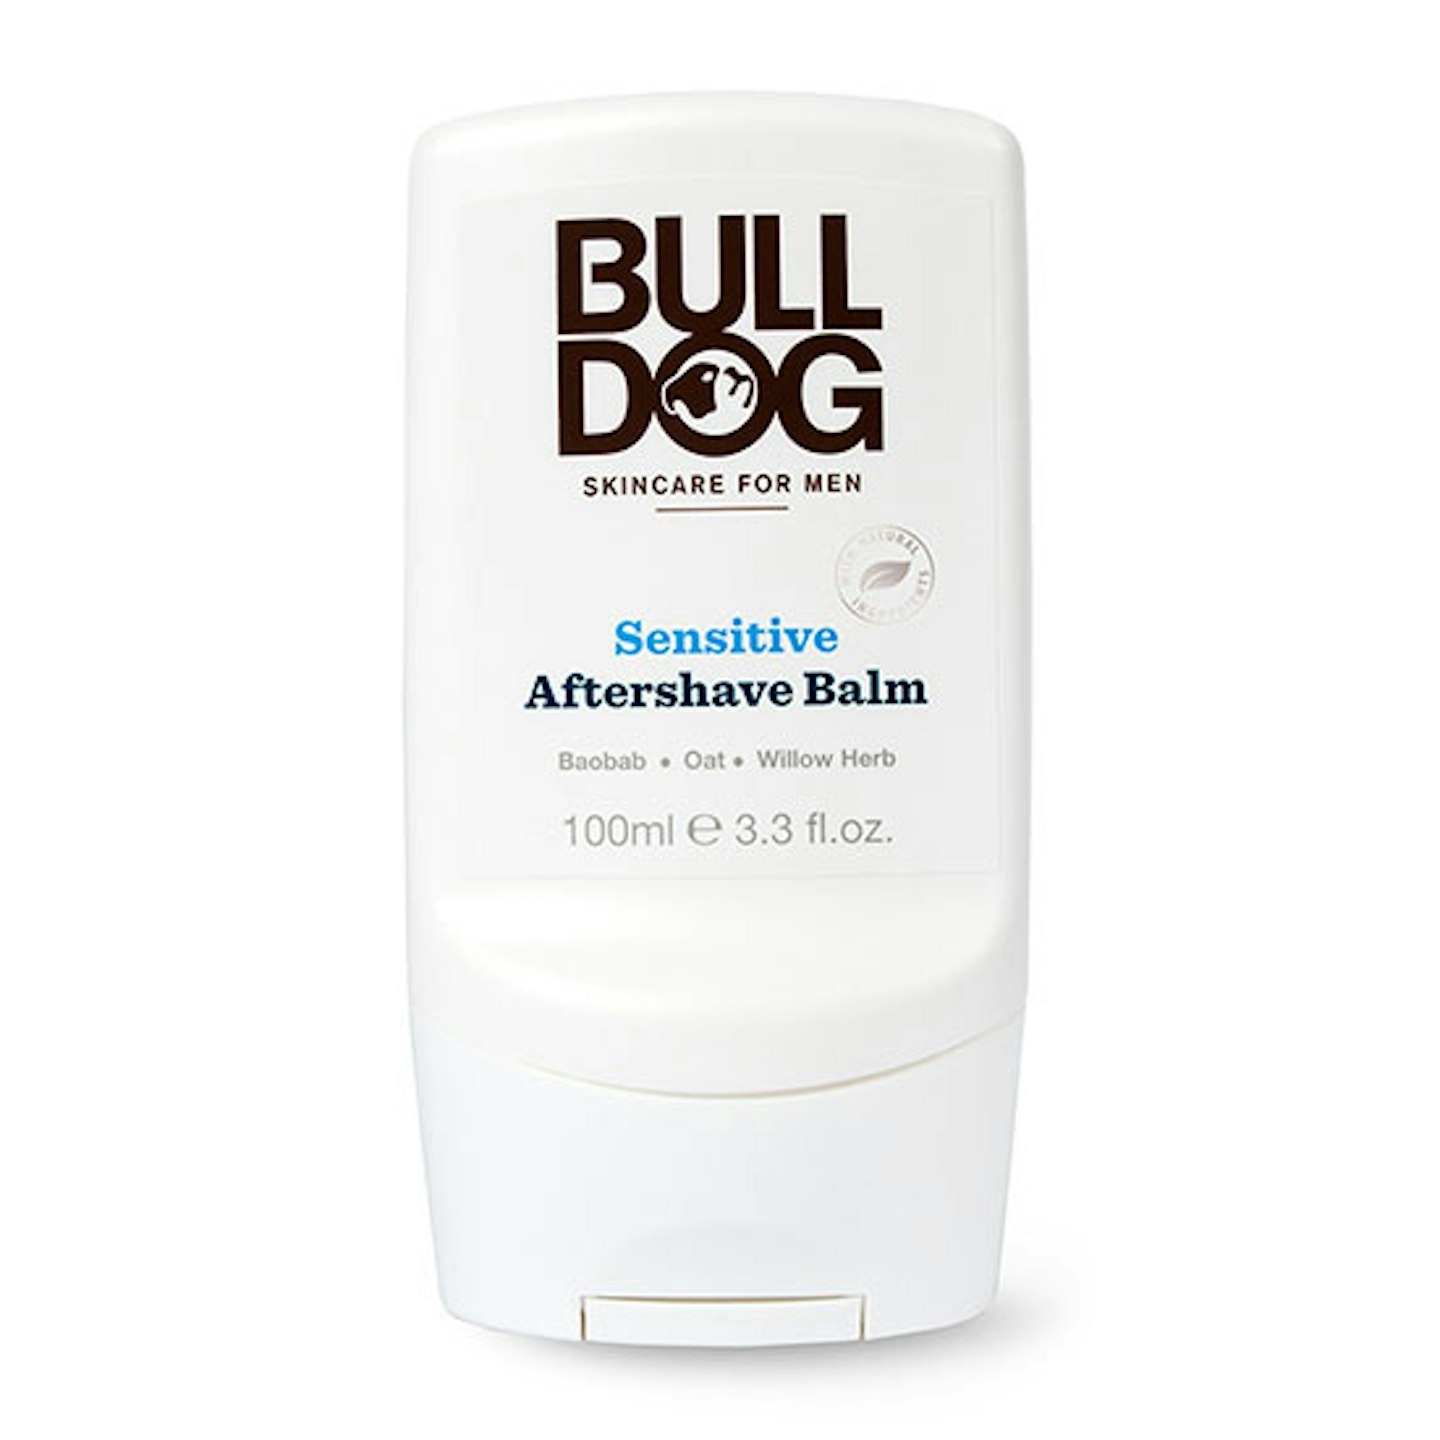 Bulldog Skincare for Men Sensitive After Shave Balm 100ml